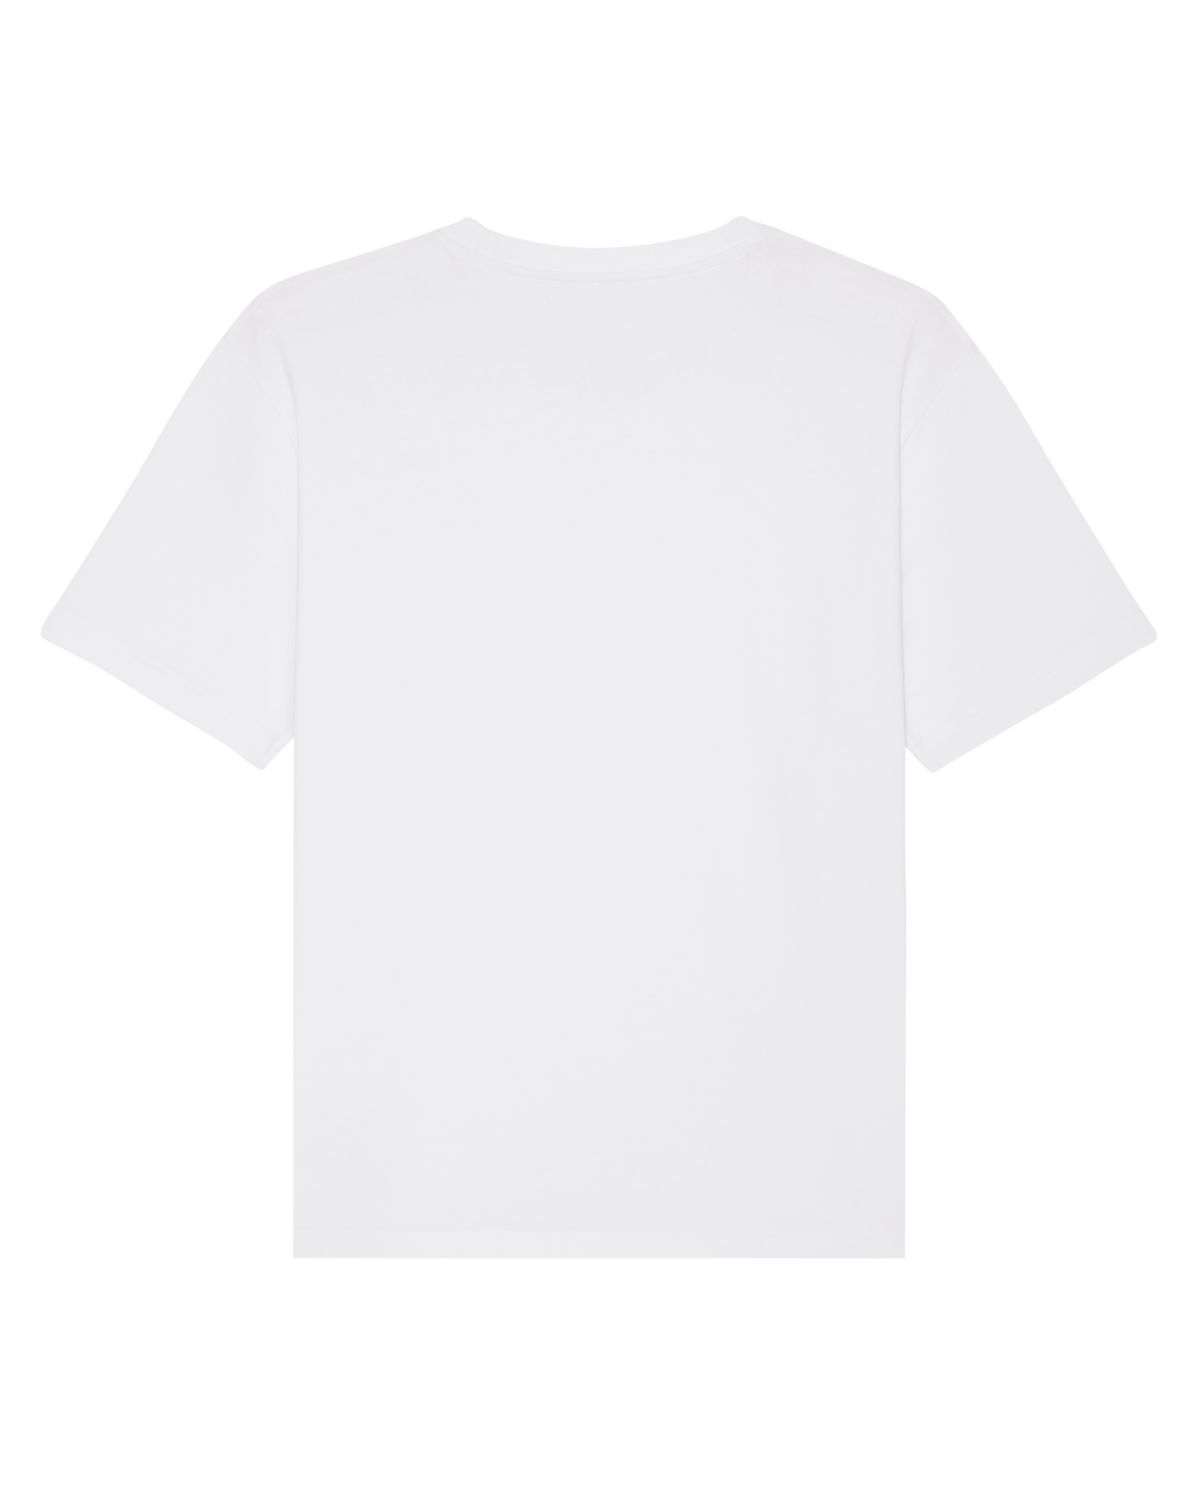 Camiseta SV Basic - White